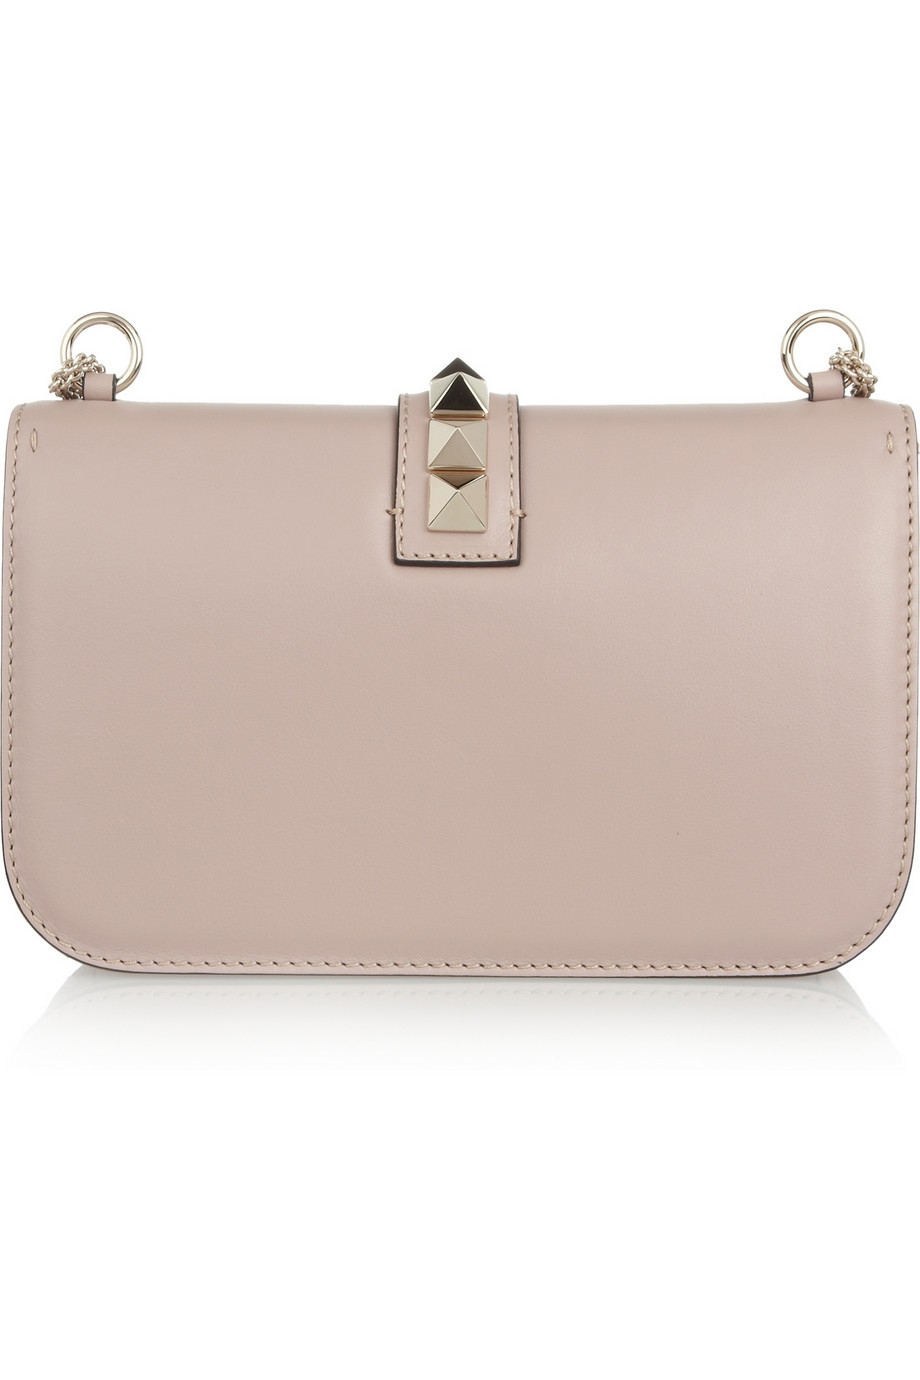 Lyst - Valentino Glam Lock Medium Leather Shoulder Bag in Natural